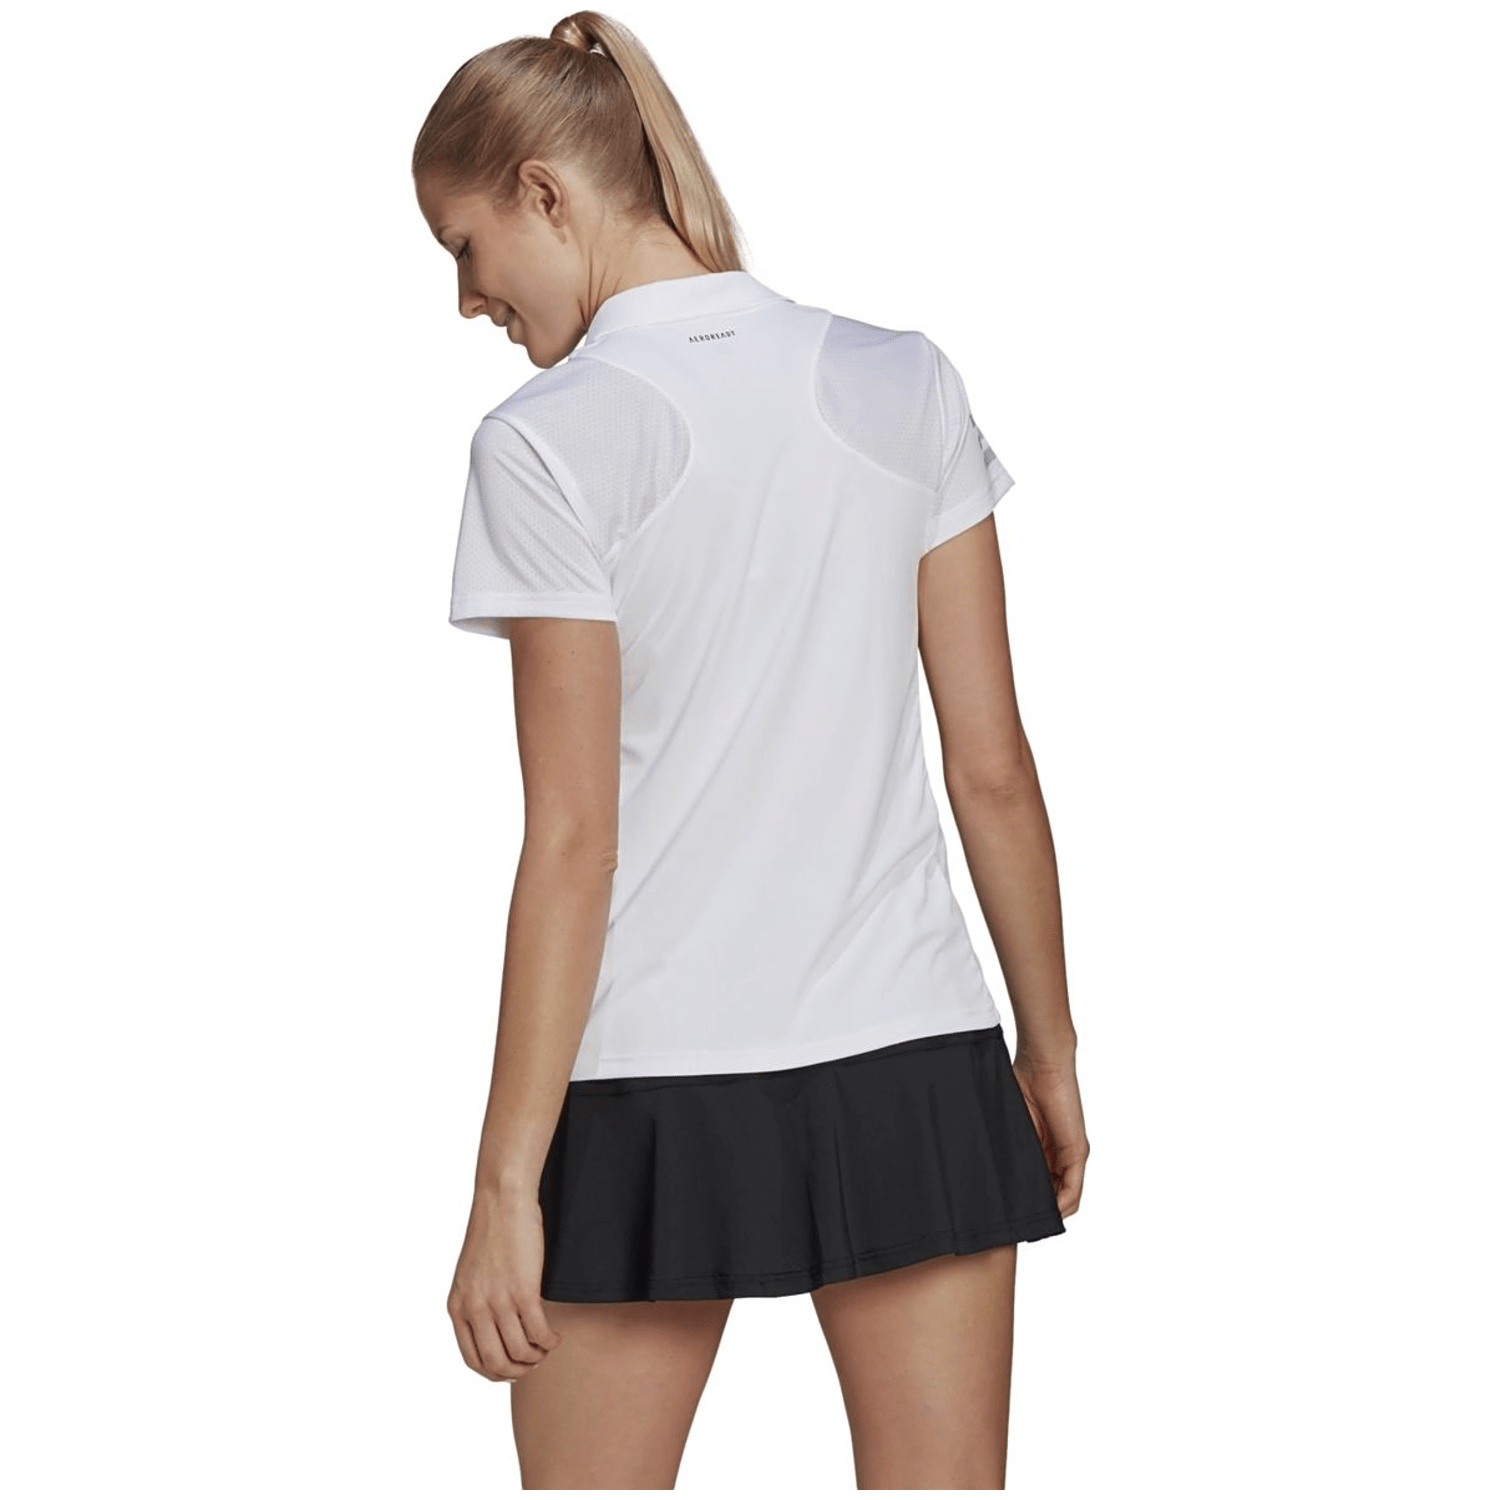 Adidas Club Tennis Ribbed Polo Shirt Damen